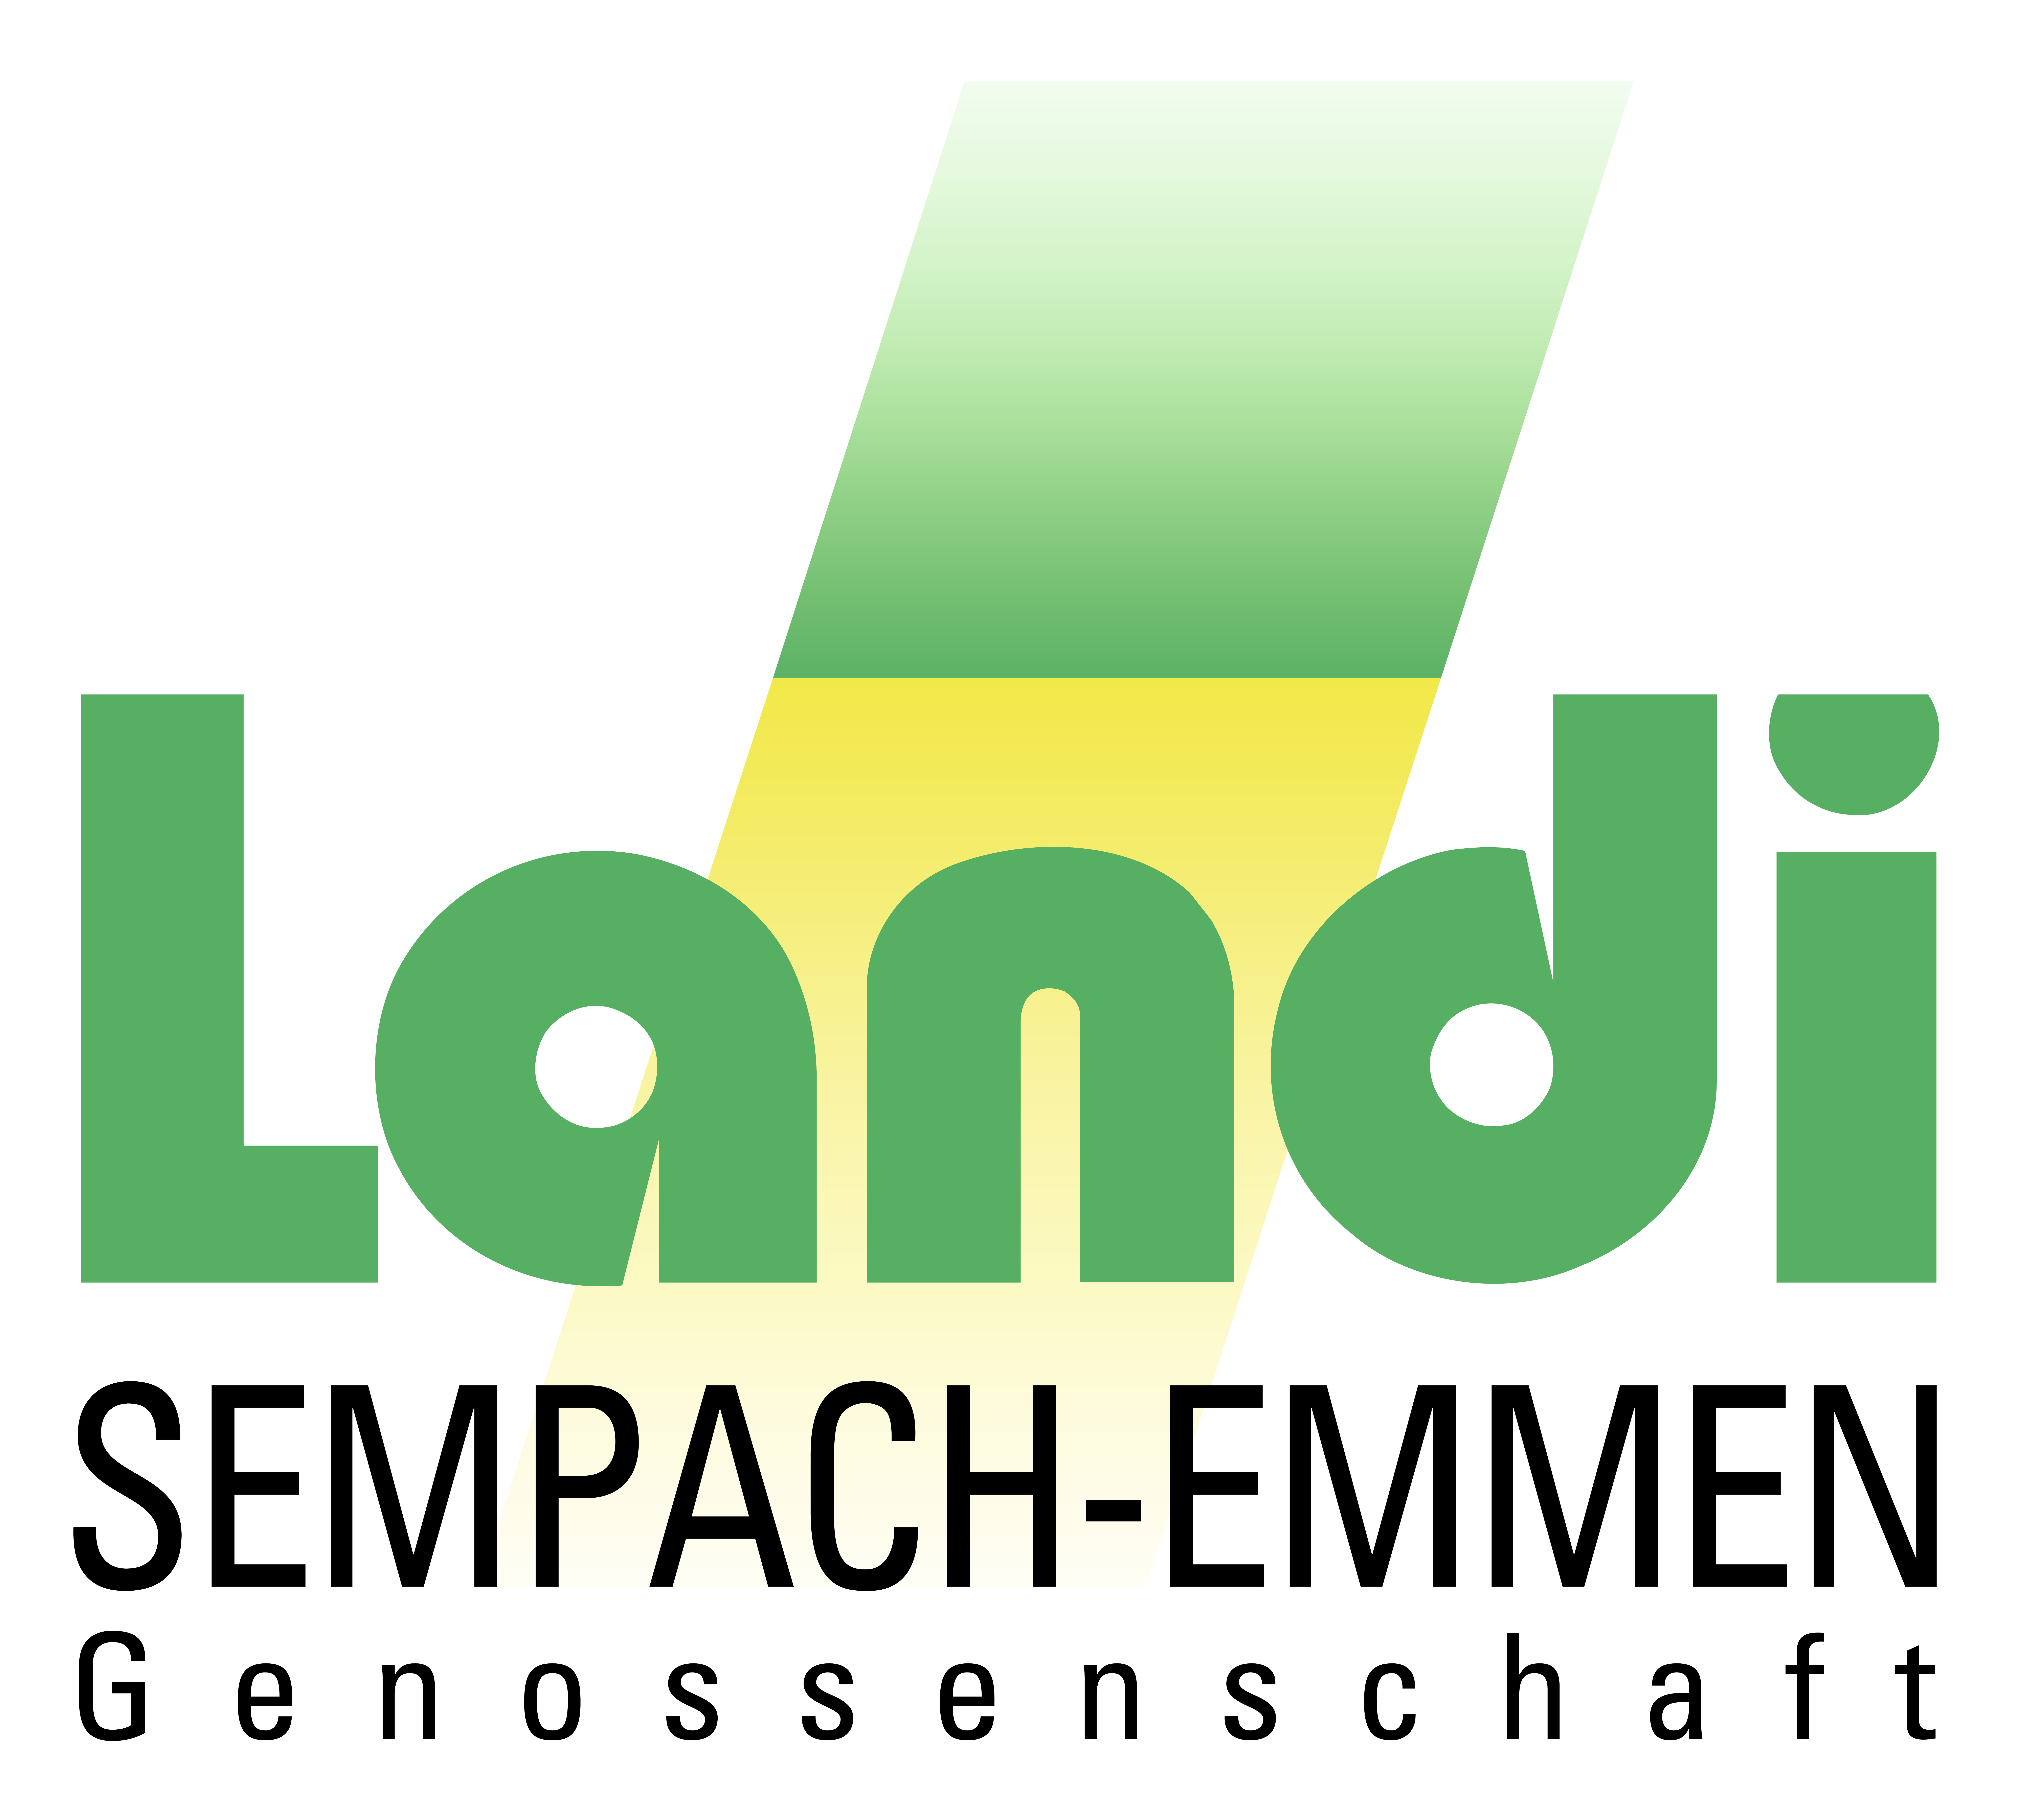 Logo LANDI Sempach-Emmen